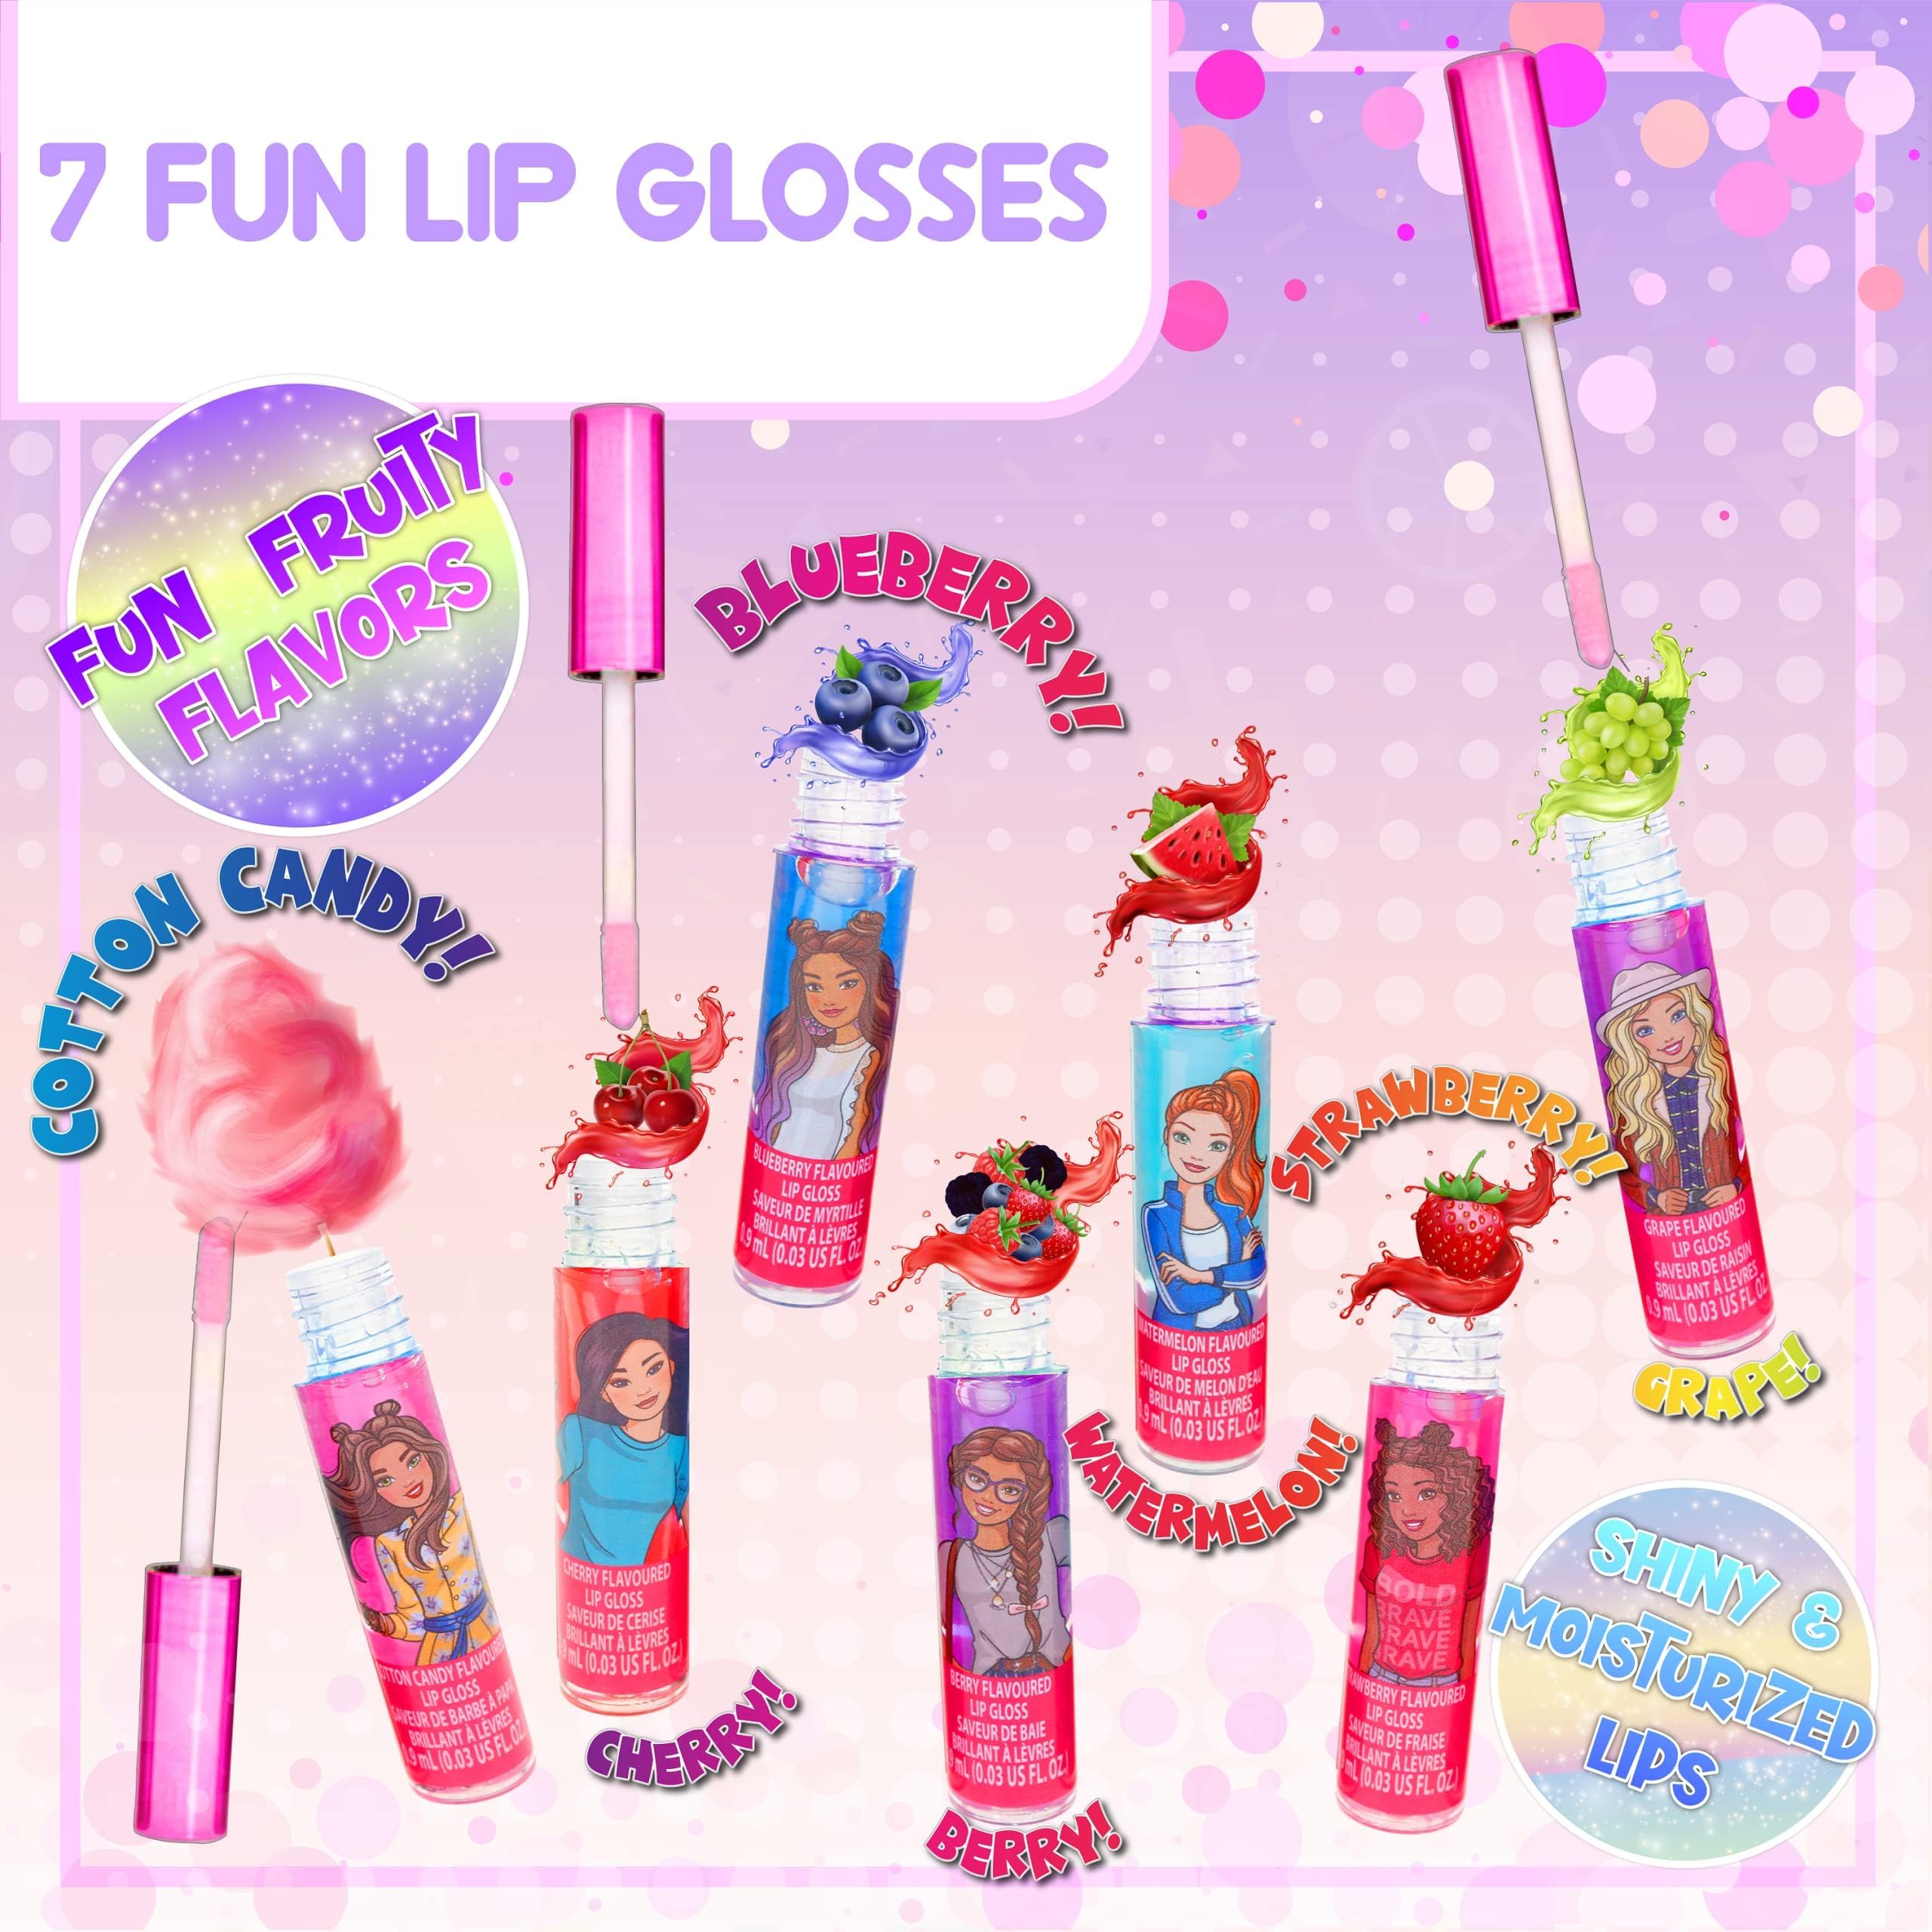 Townley Girl Barbie 7 pcs Kids Lip Gloss Set | Vegan Girls Makeup for Ages 3